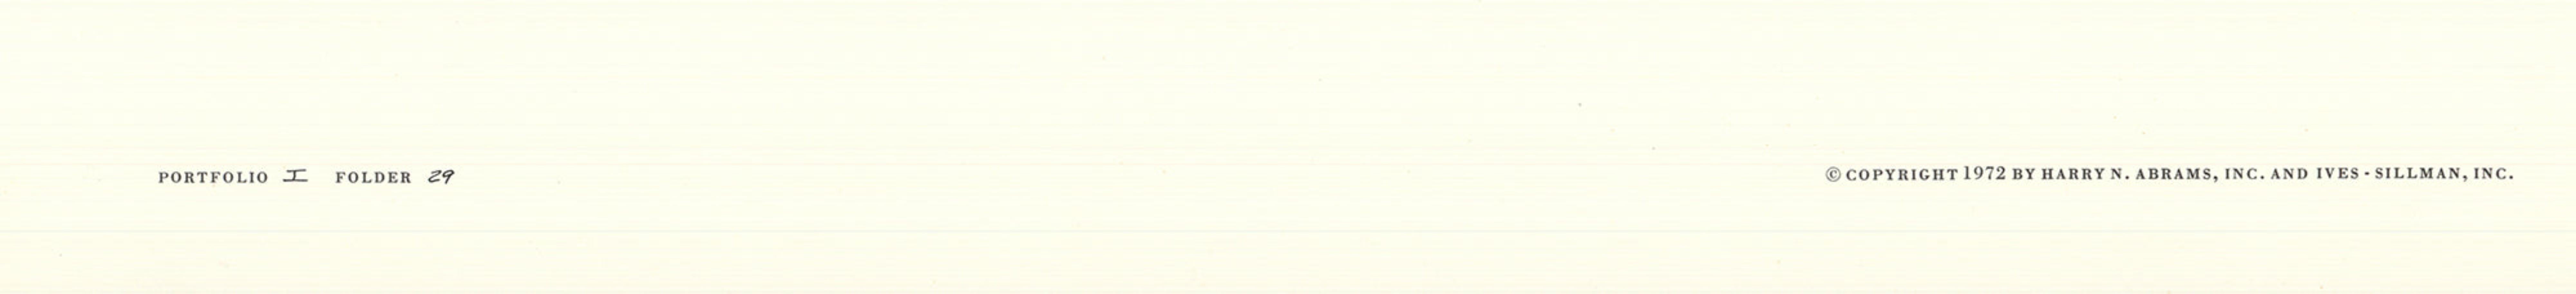 Josef Albers « Formulation: Articulation Portfolio 1, Folder 29 » 1972- Sérigraphie en vente 3